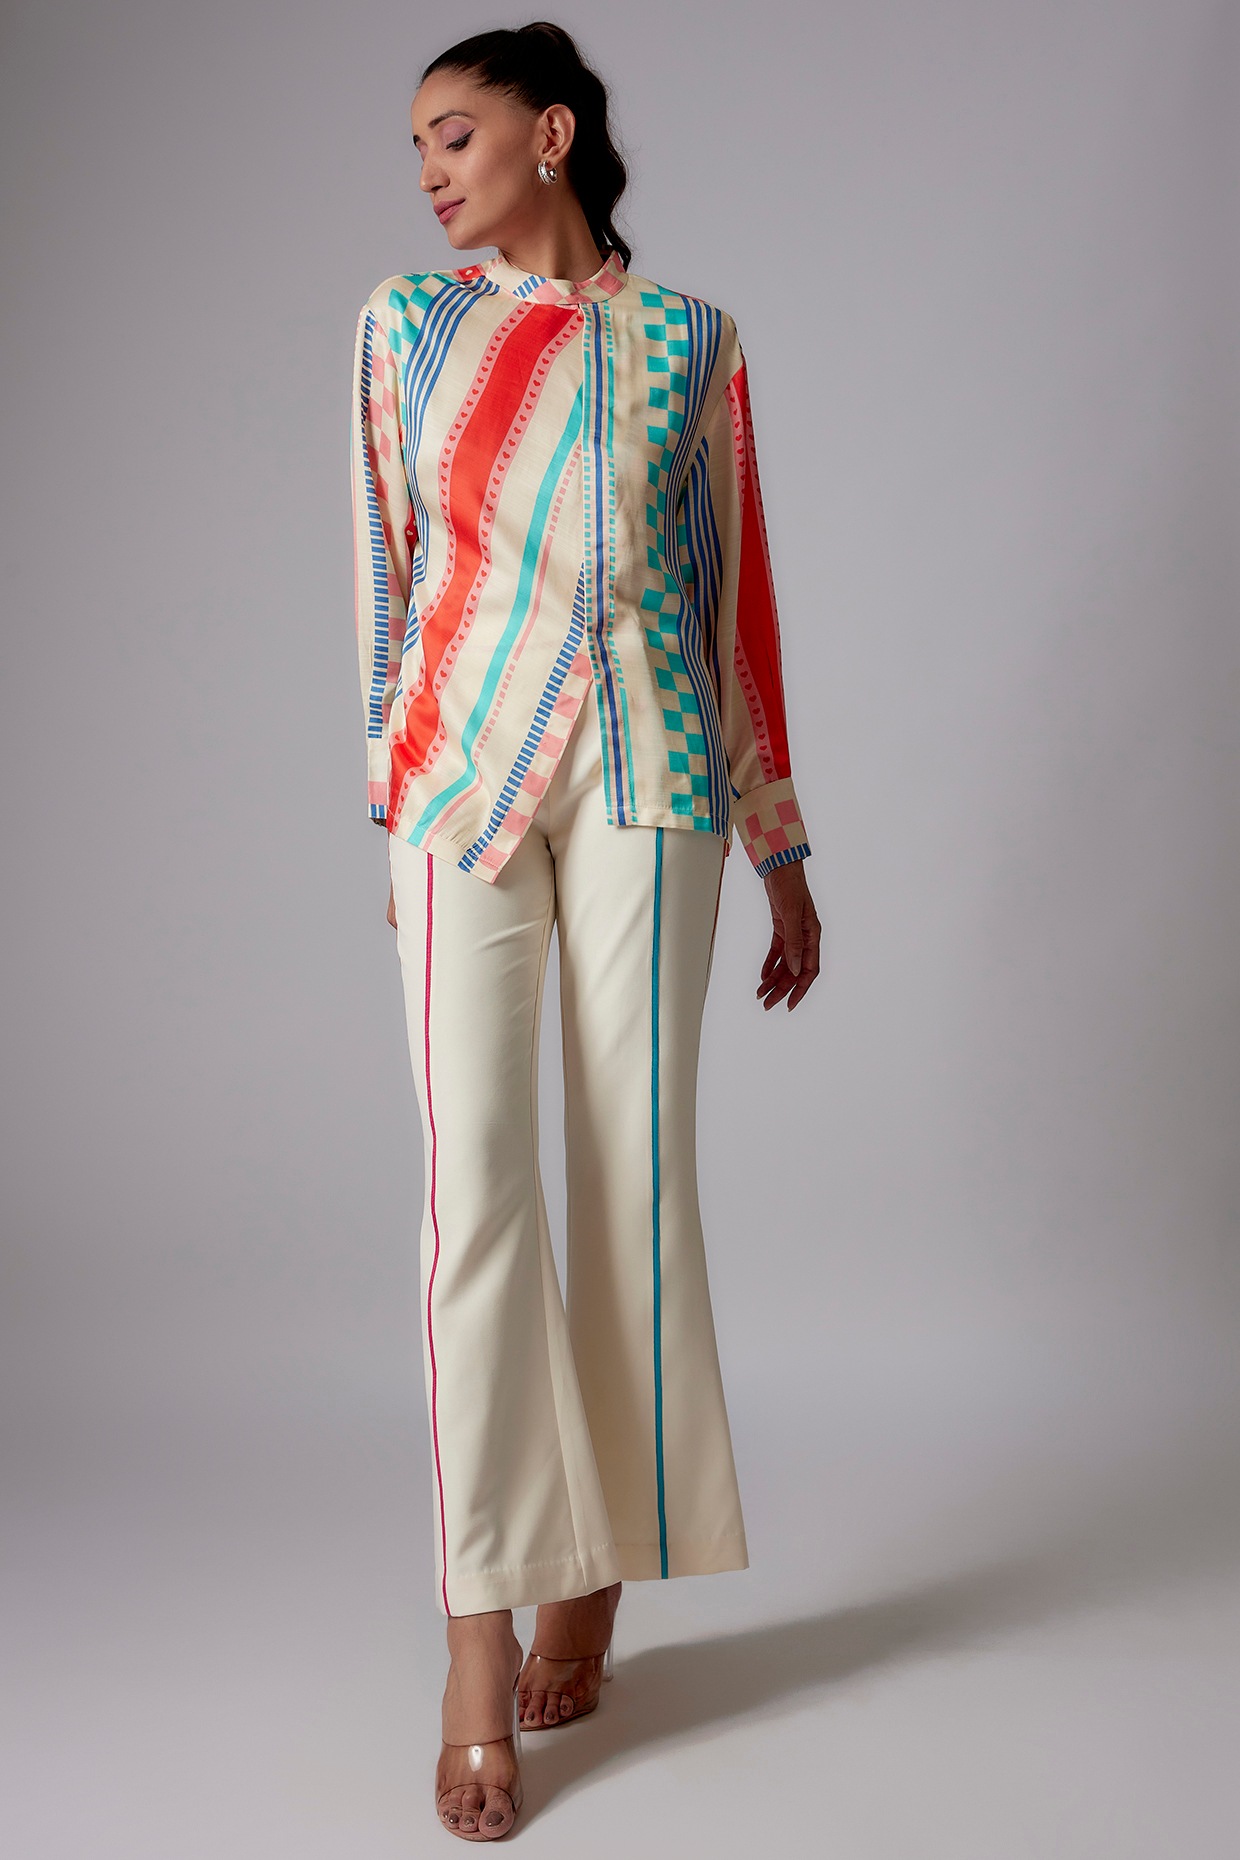 Zara Hippie Floral Bell Bottom Botany Pant… | Bell bottoms, Clothes design,  Formal dresses long